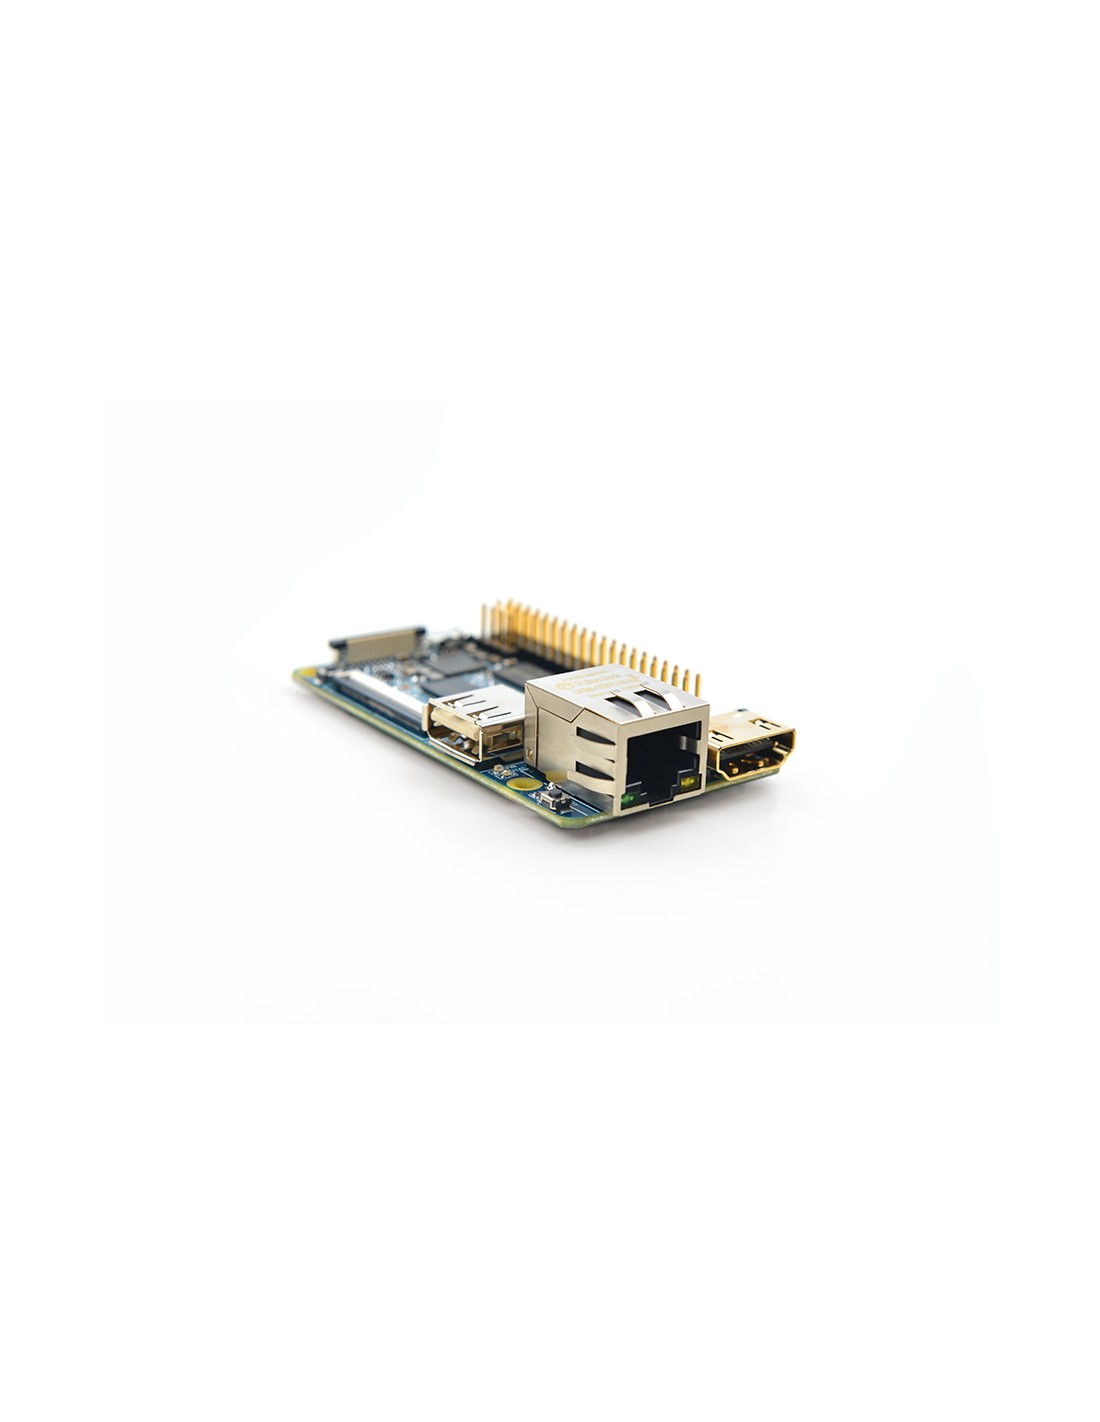 Quad-Core A9 GigE 1GB DDR3 Gigabit Ethernet NanoPi 2 Fire 